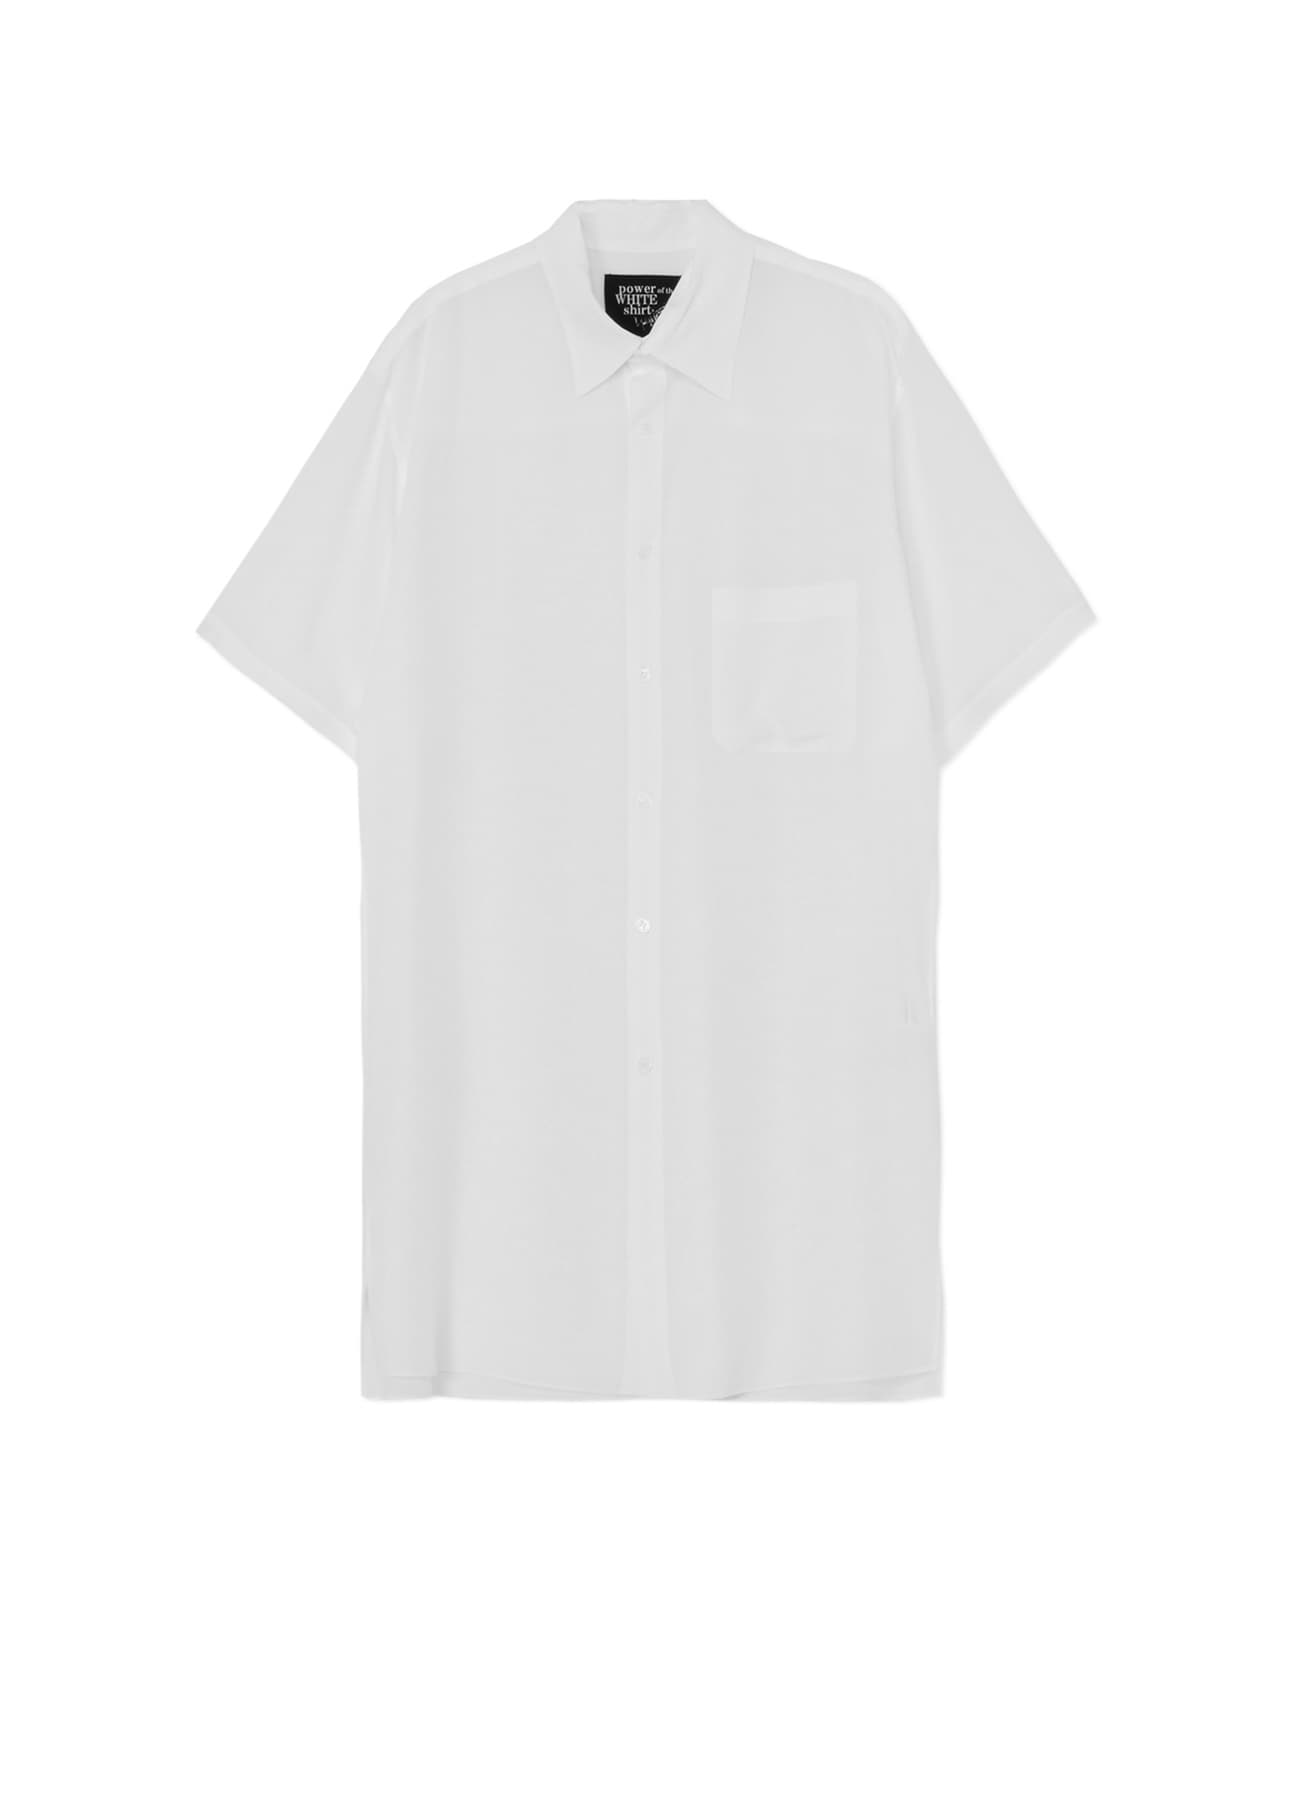 power of the WHITE shirt｜THE SHOP YOHJI YAMAMOTO